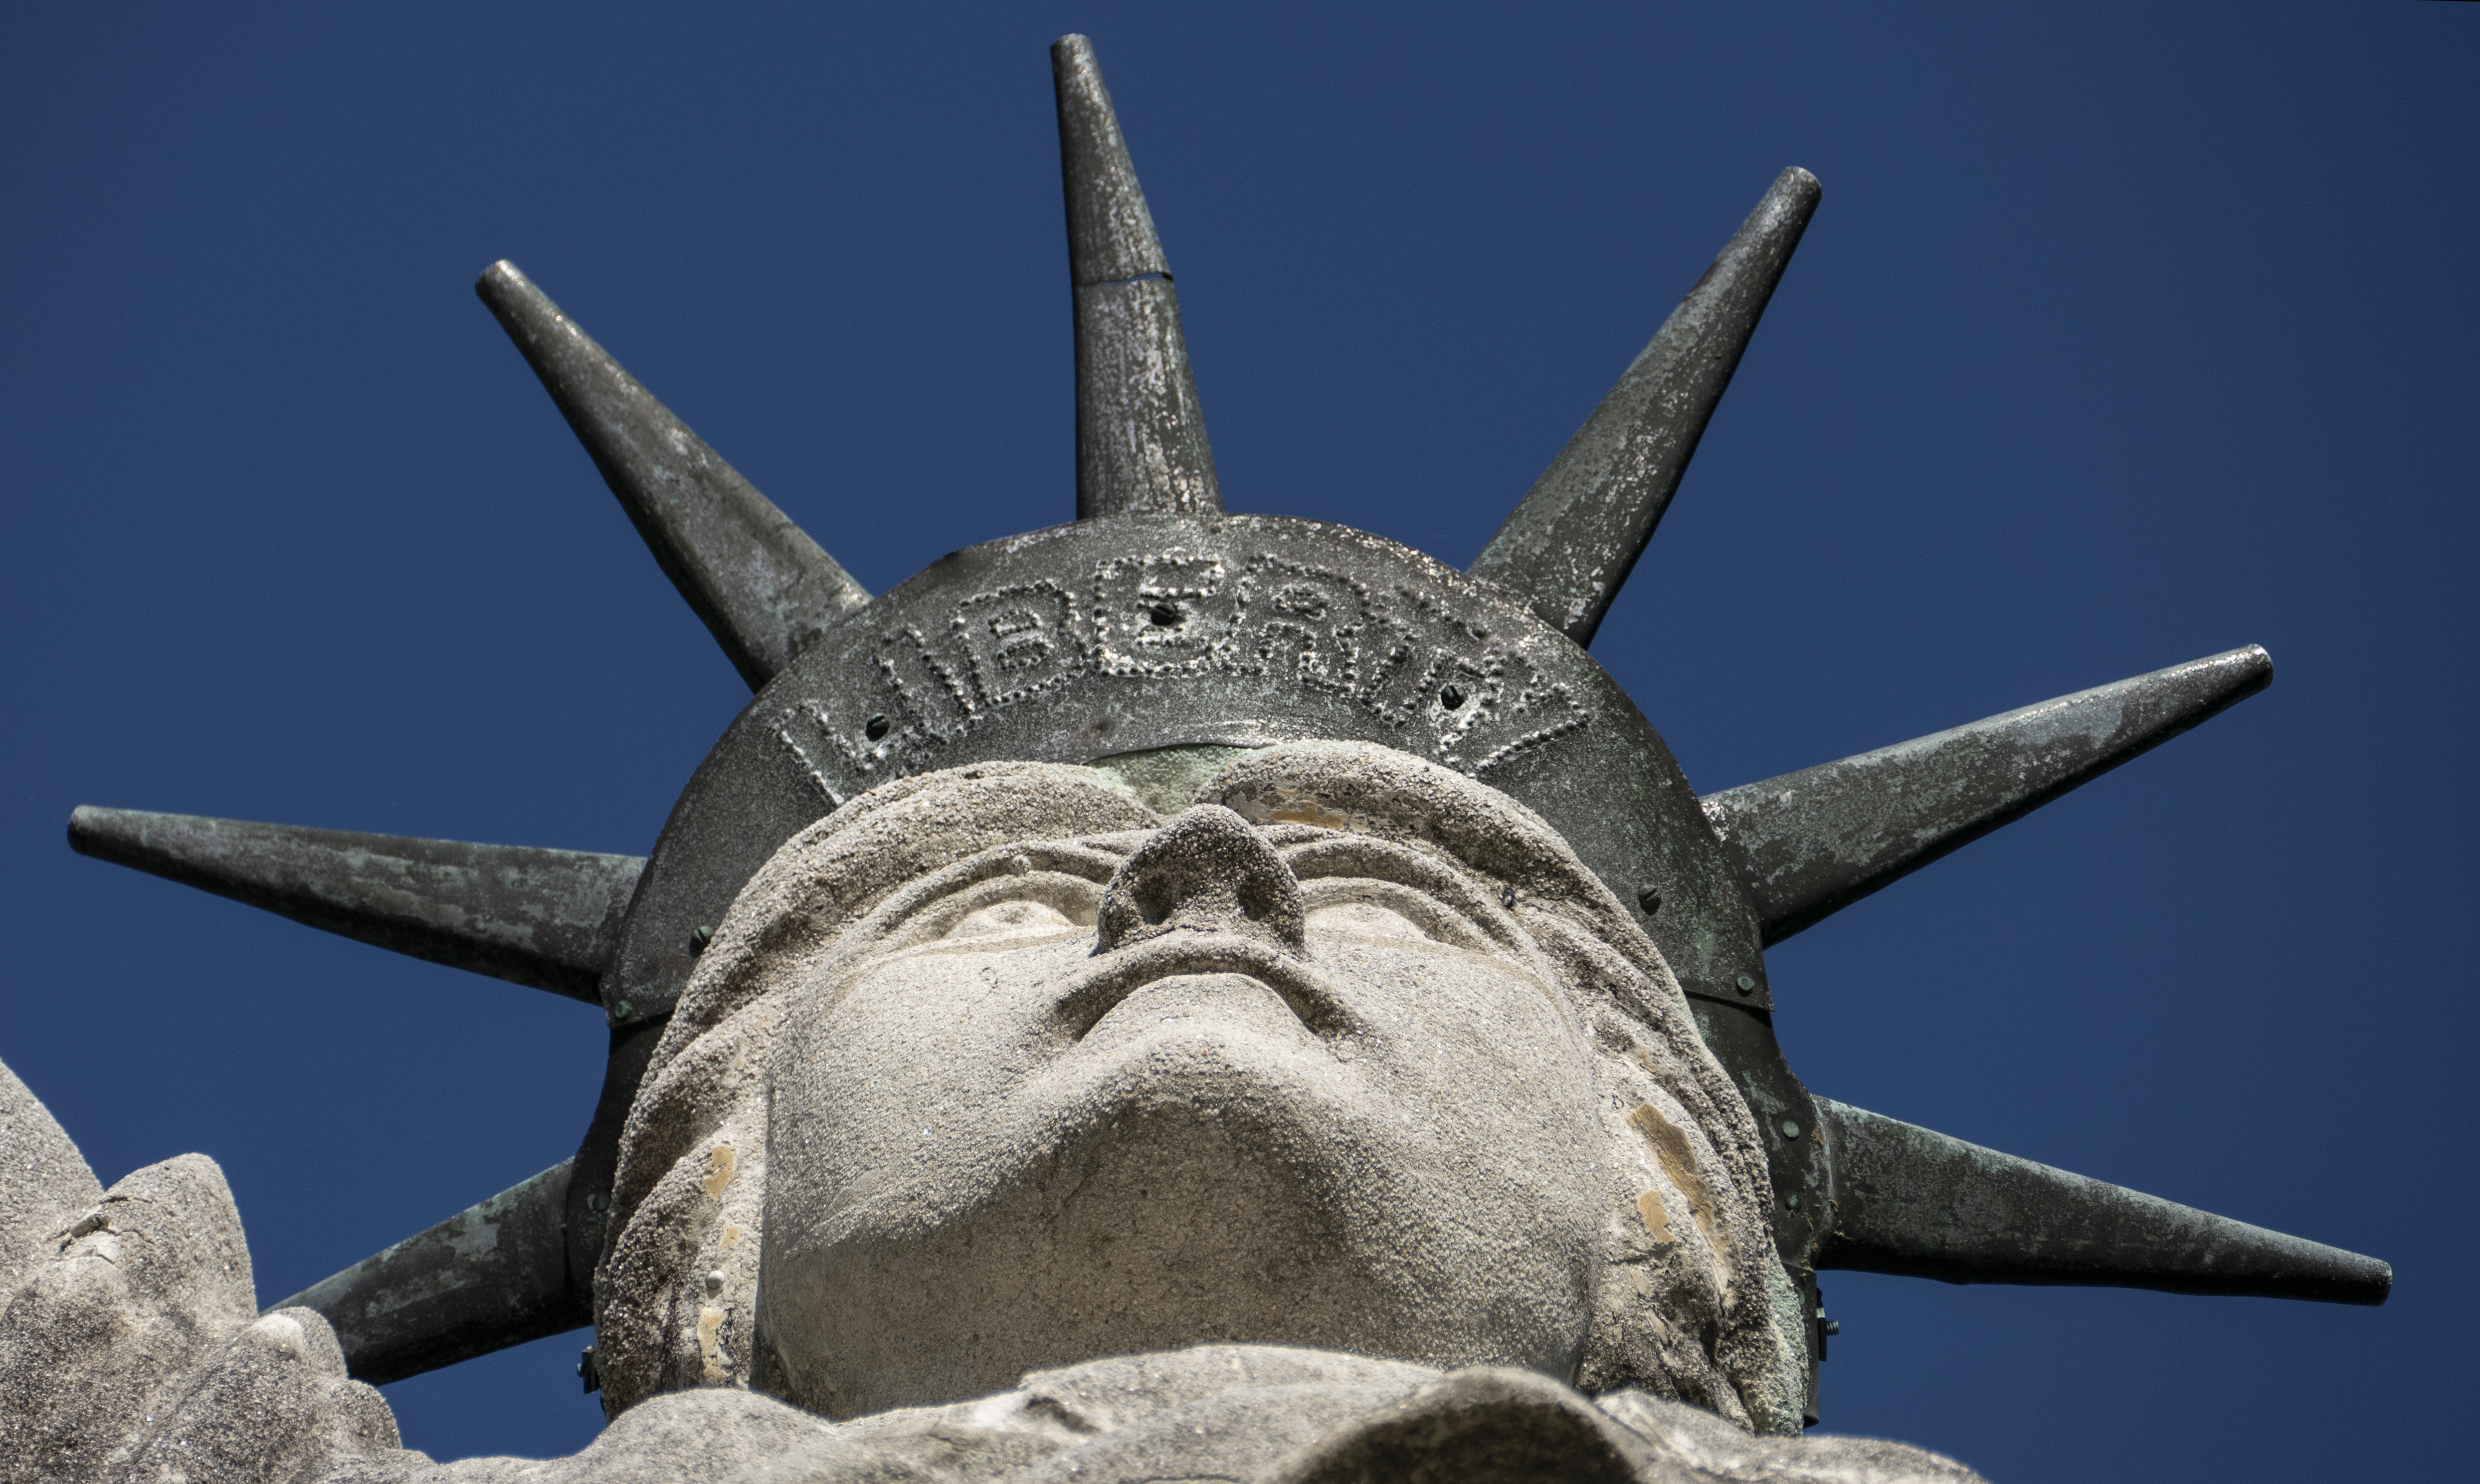 New Jersey wants Statue of Liberty as its landmark on its next